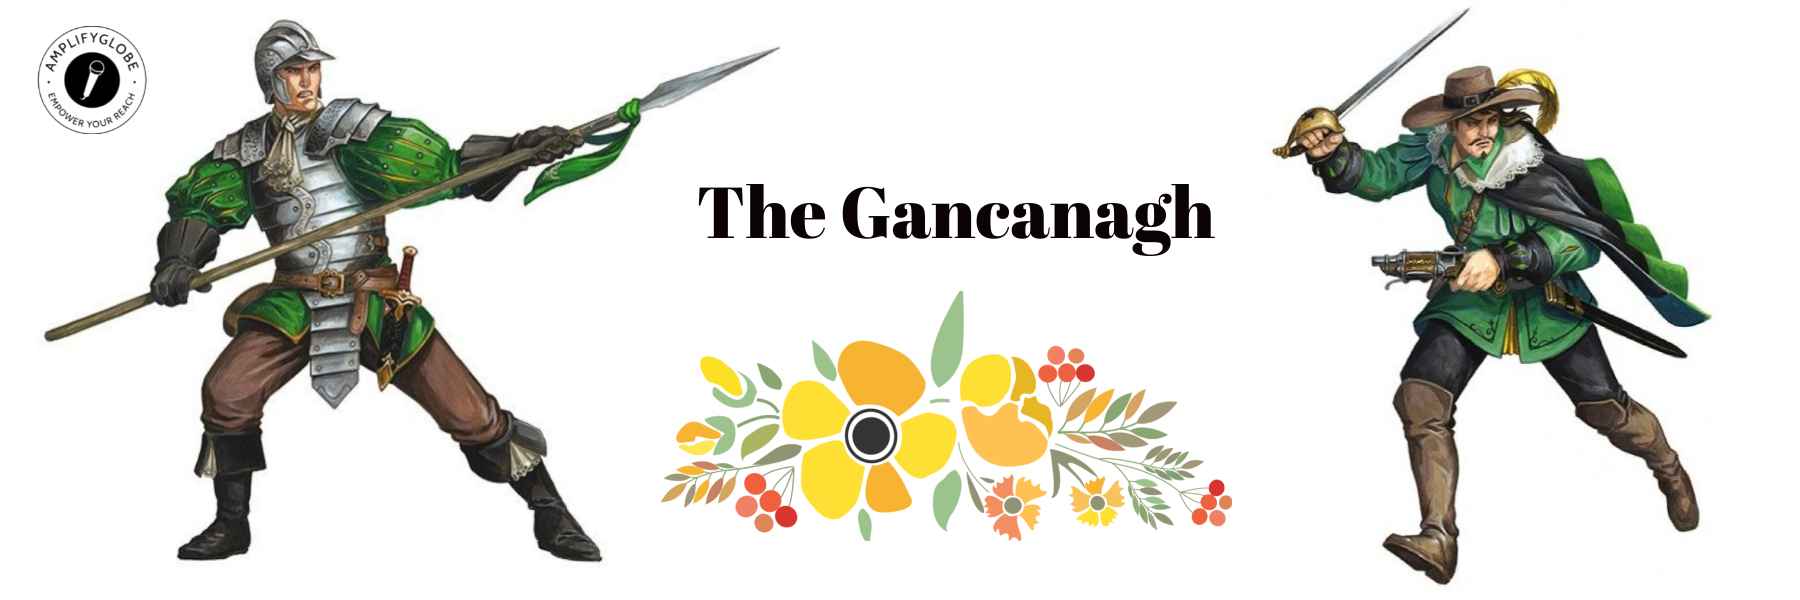 The gancanagh